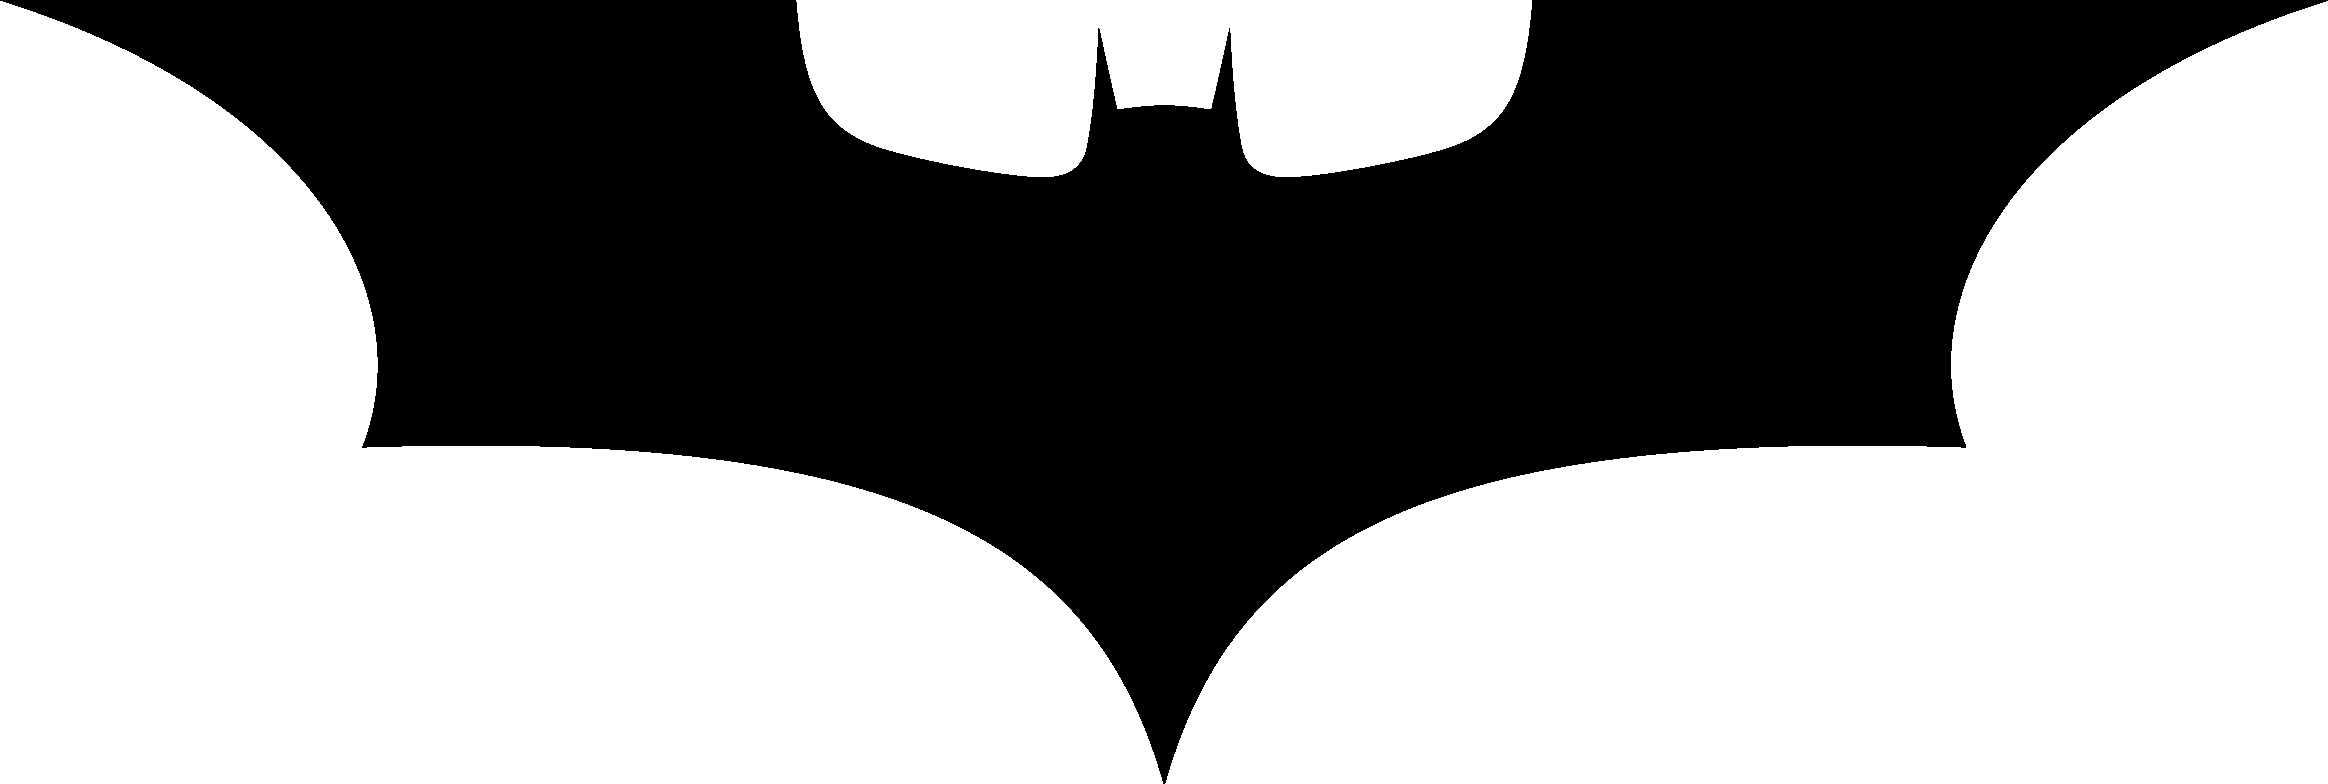 Batman Logo Silhouette - ClipArt Best